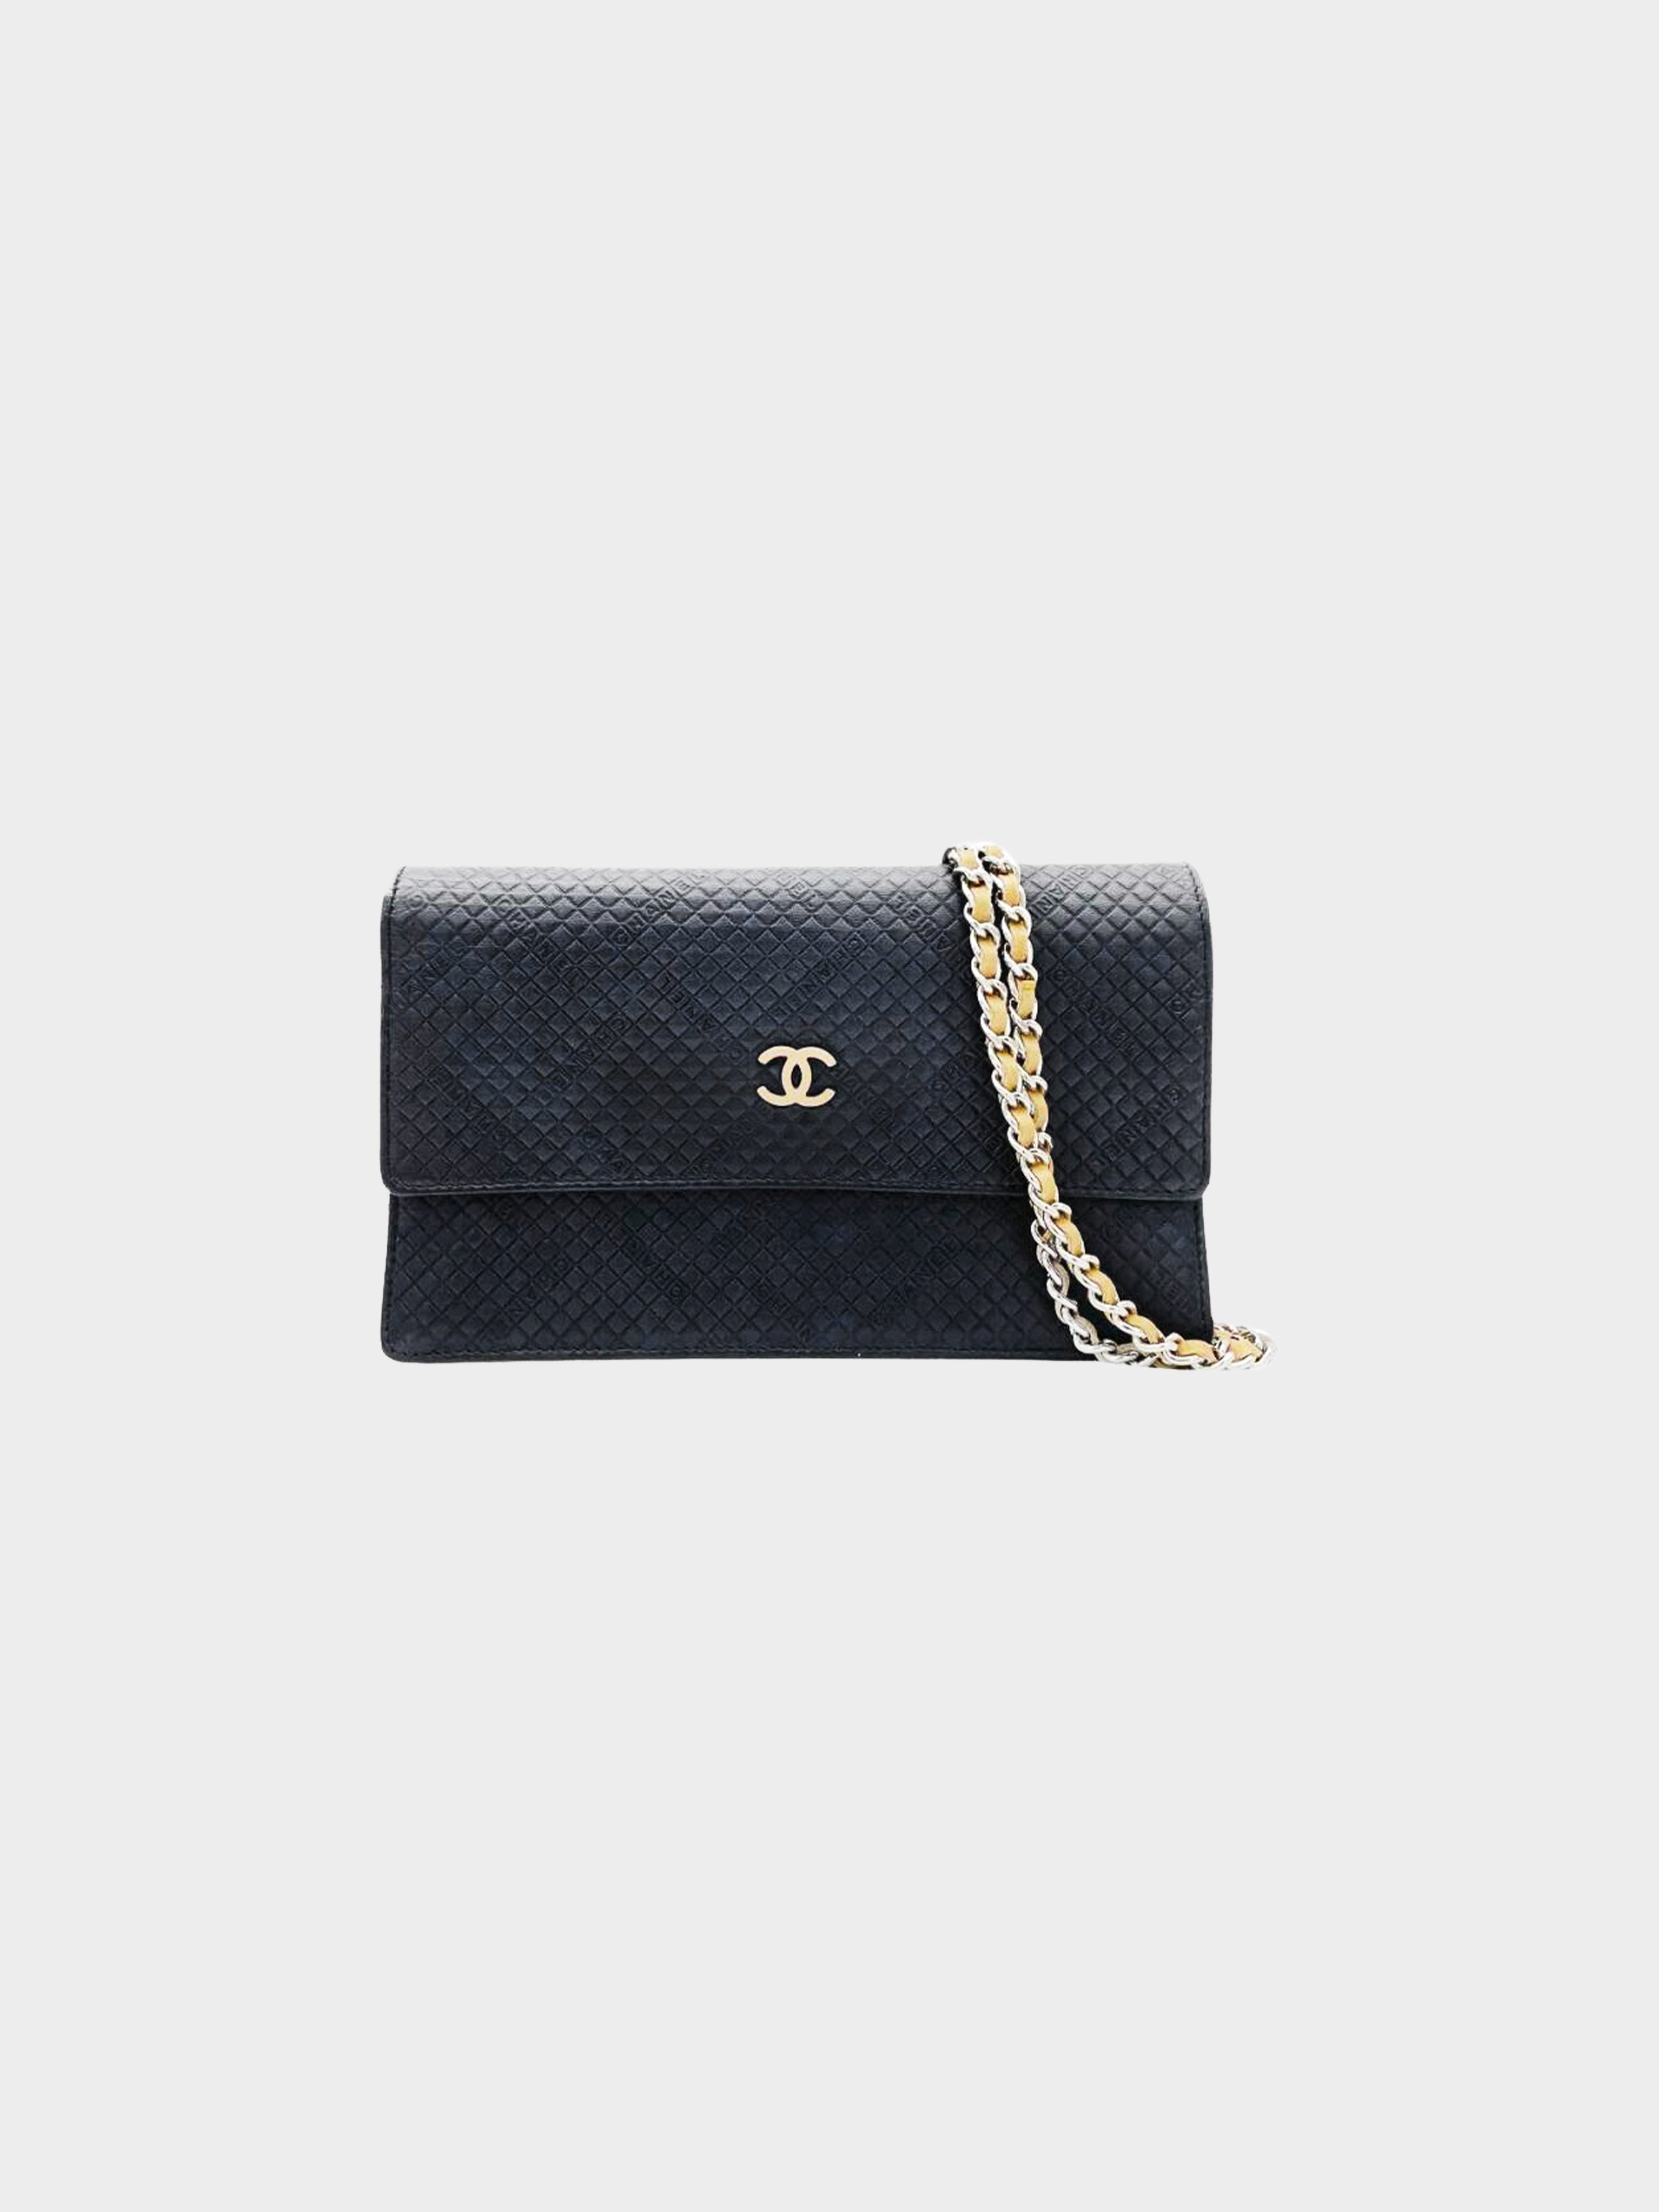 Chanel 2005 Handbag 330547